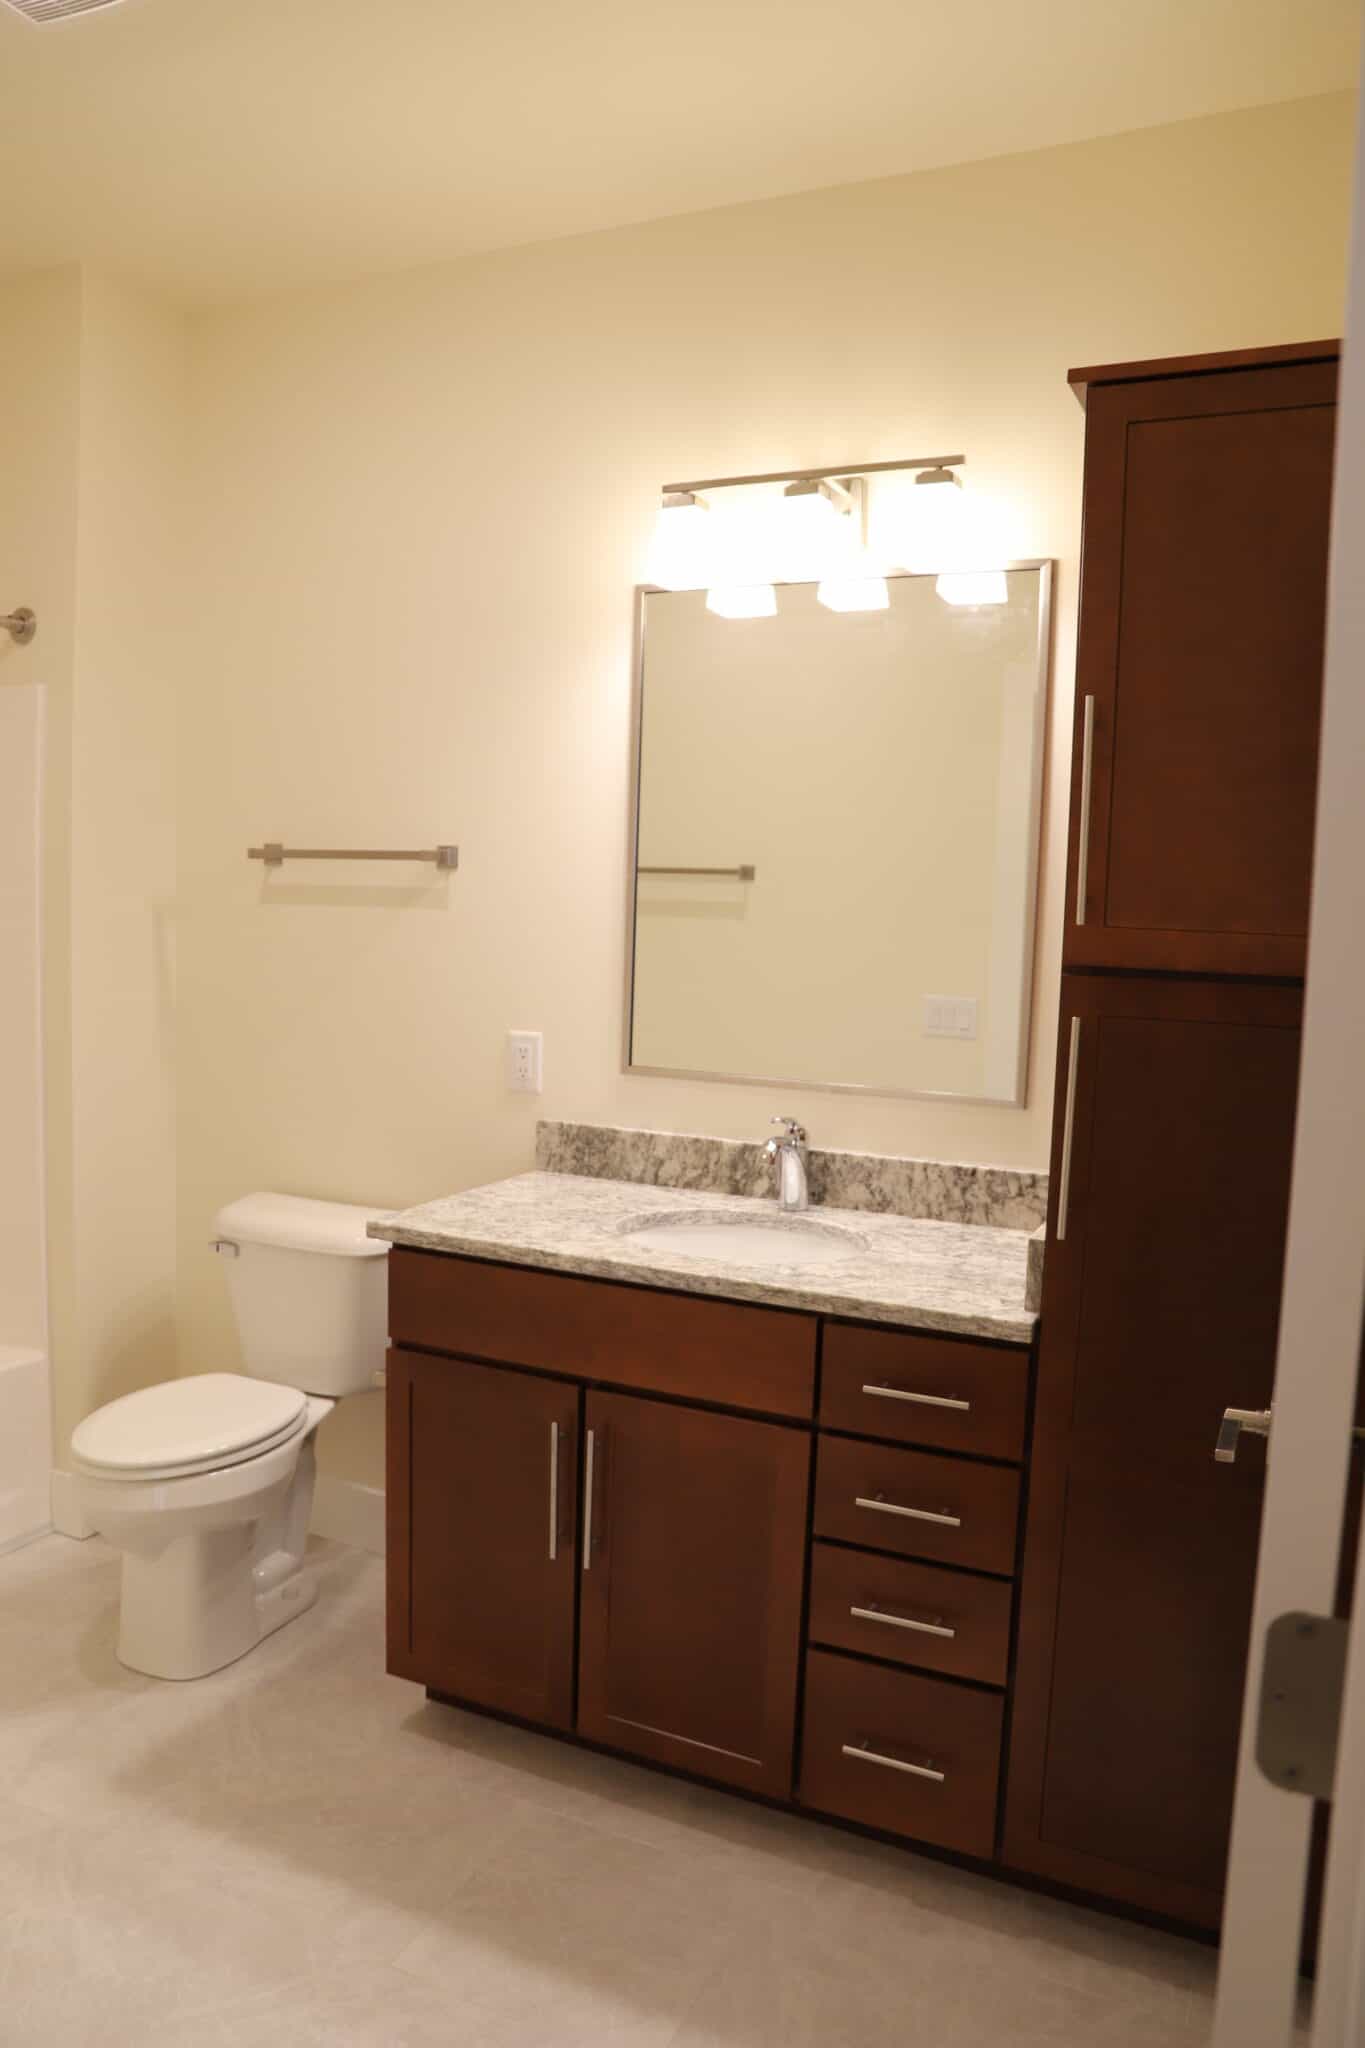 My Apartment Bathroom Tour | Easy & Inexpensive Apartment Bathroom ...